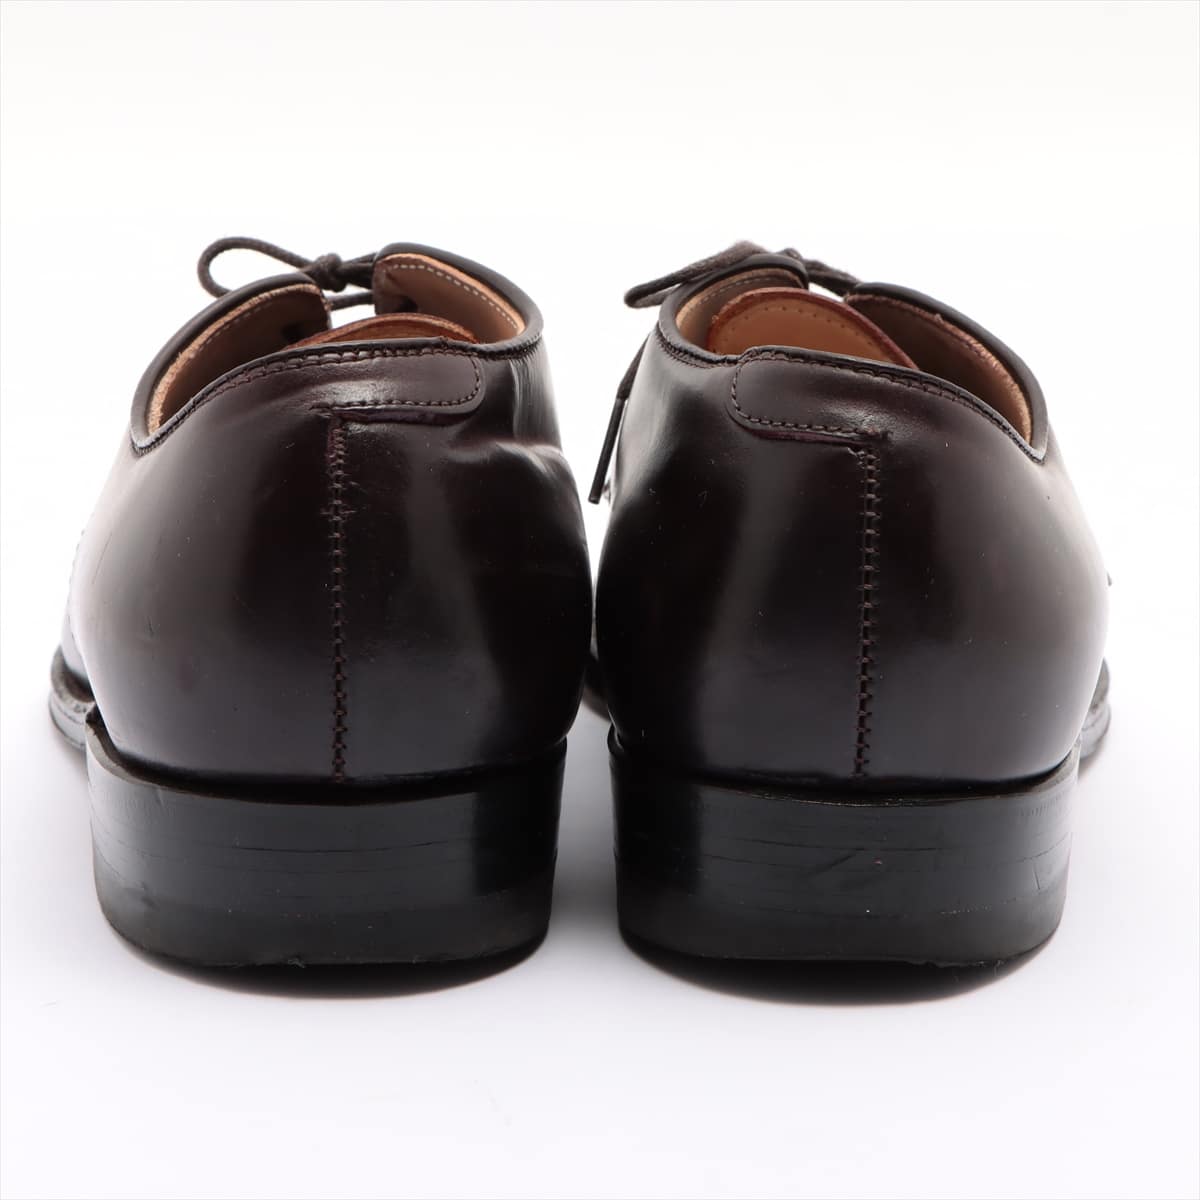 Alden Cordovan Leather shoes 7 1/2 Men's Brown 54321